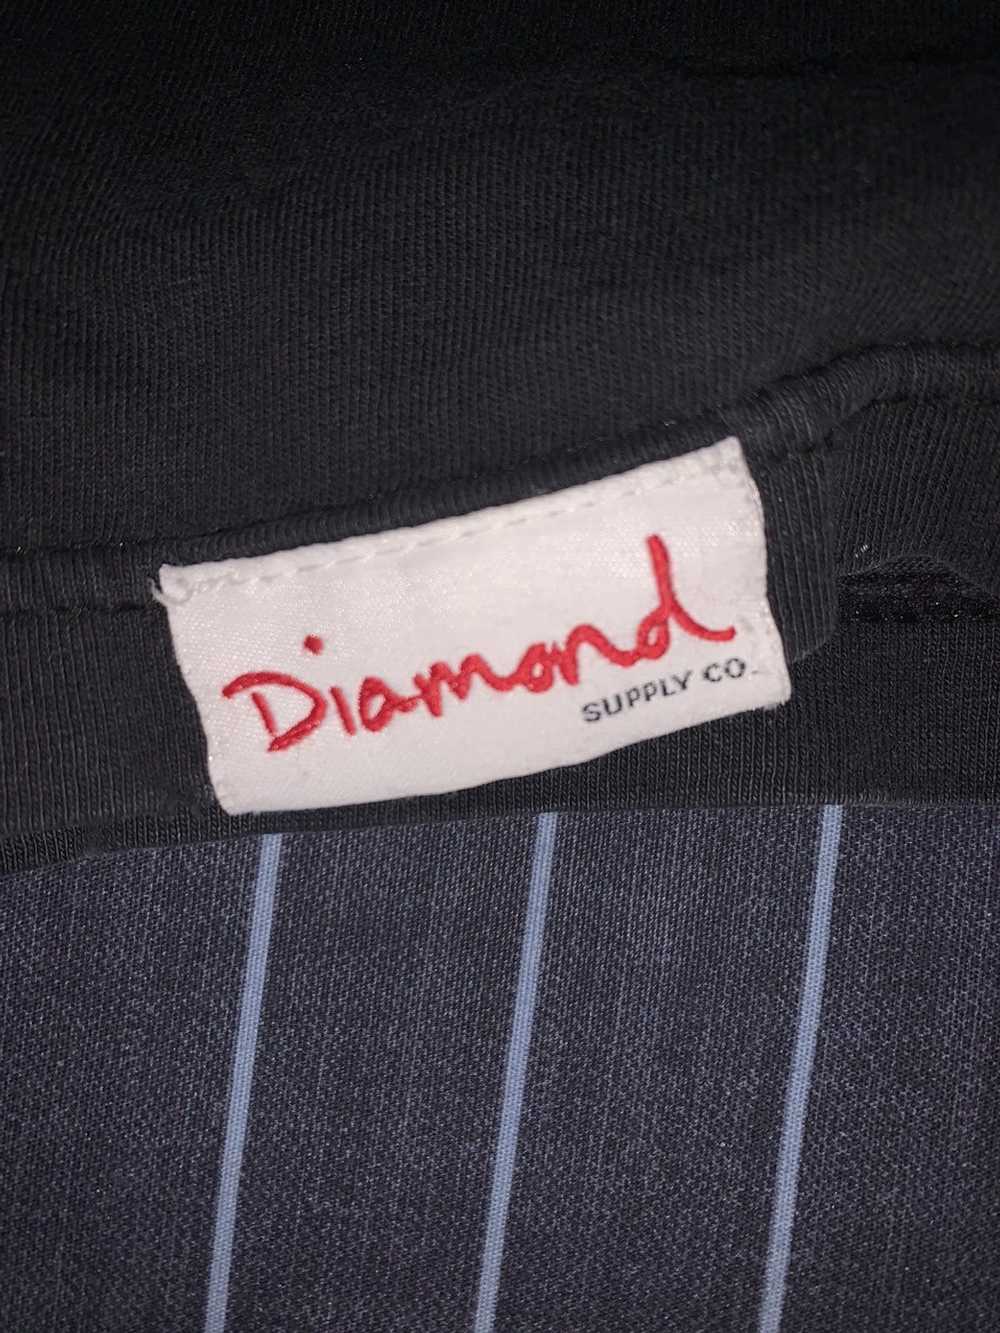 Diamond Supply Co Snake and Rose T-Shirt - image 2